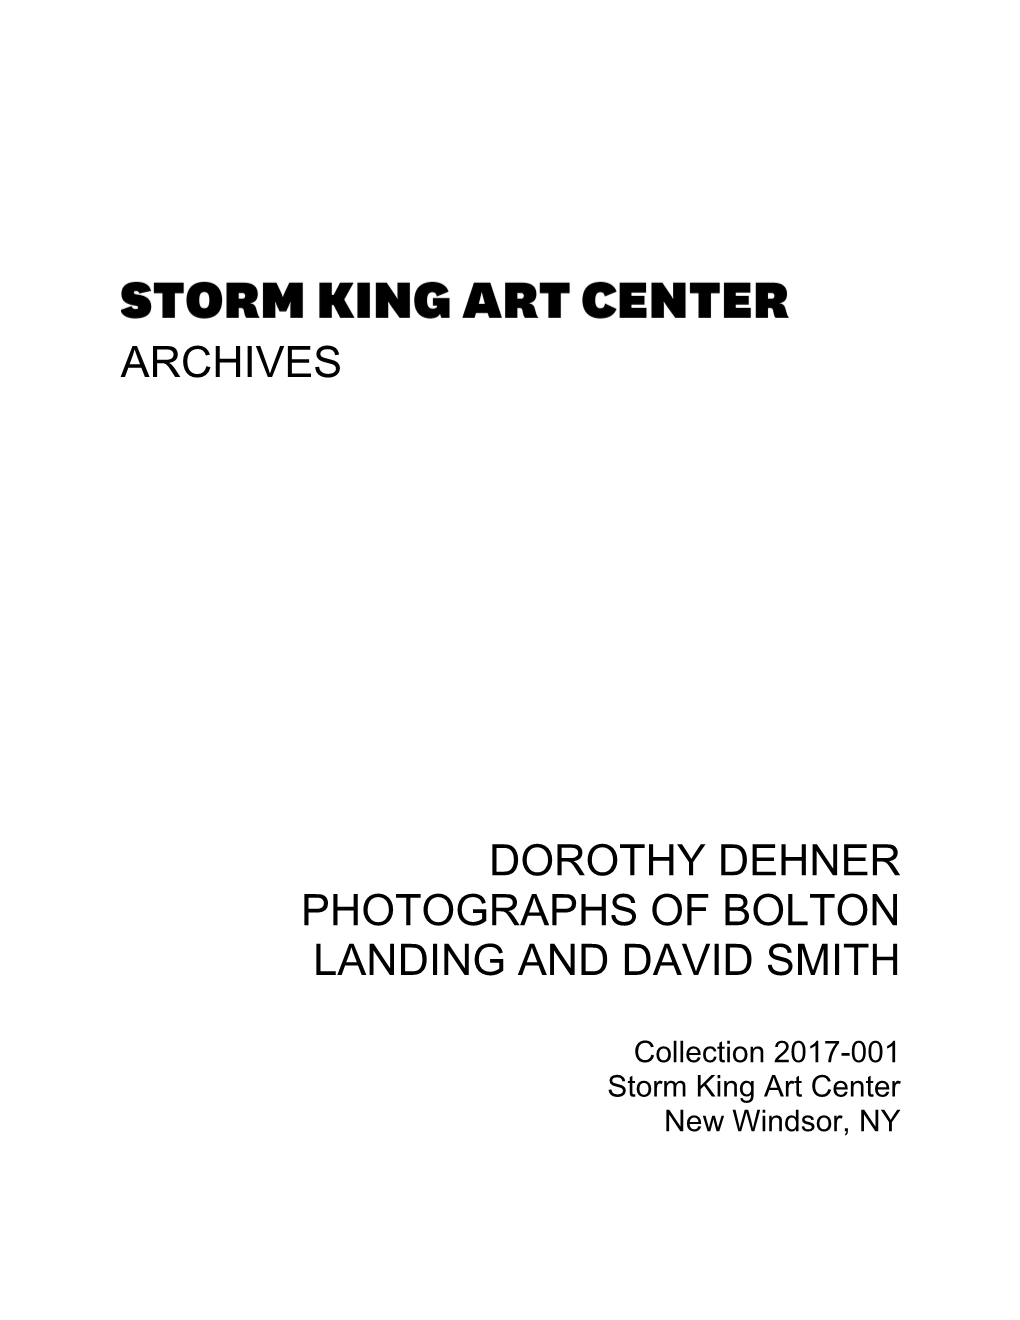 Archives Dorothy Dehner Photographs of Bolton